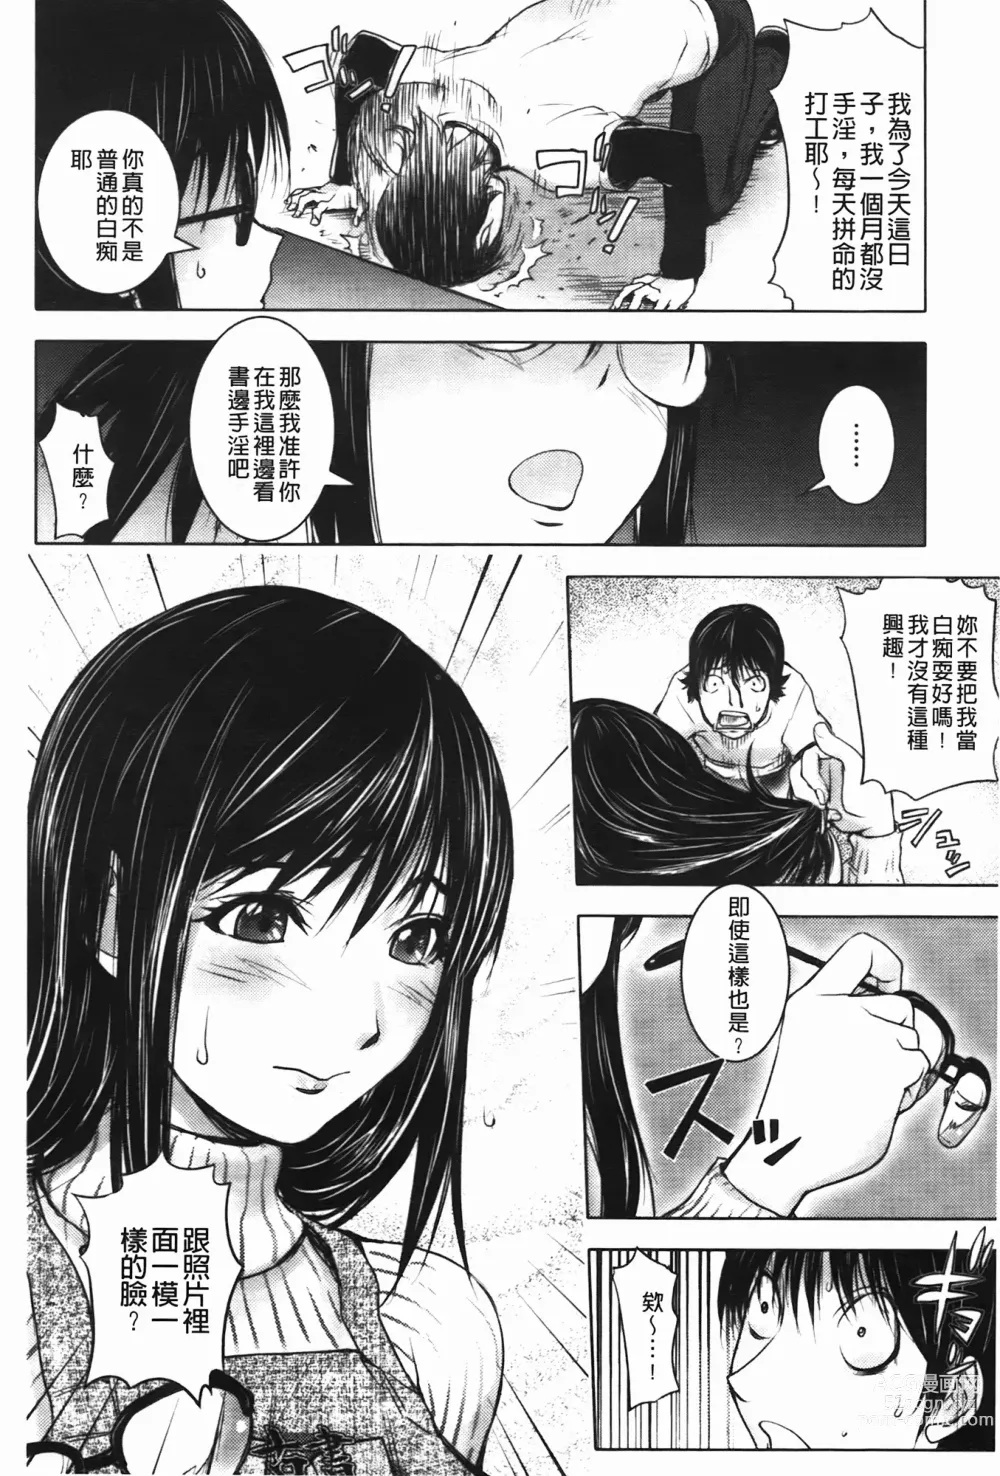 Page 6 of manga Midara Books 1-4